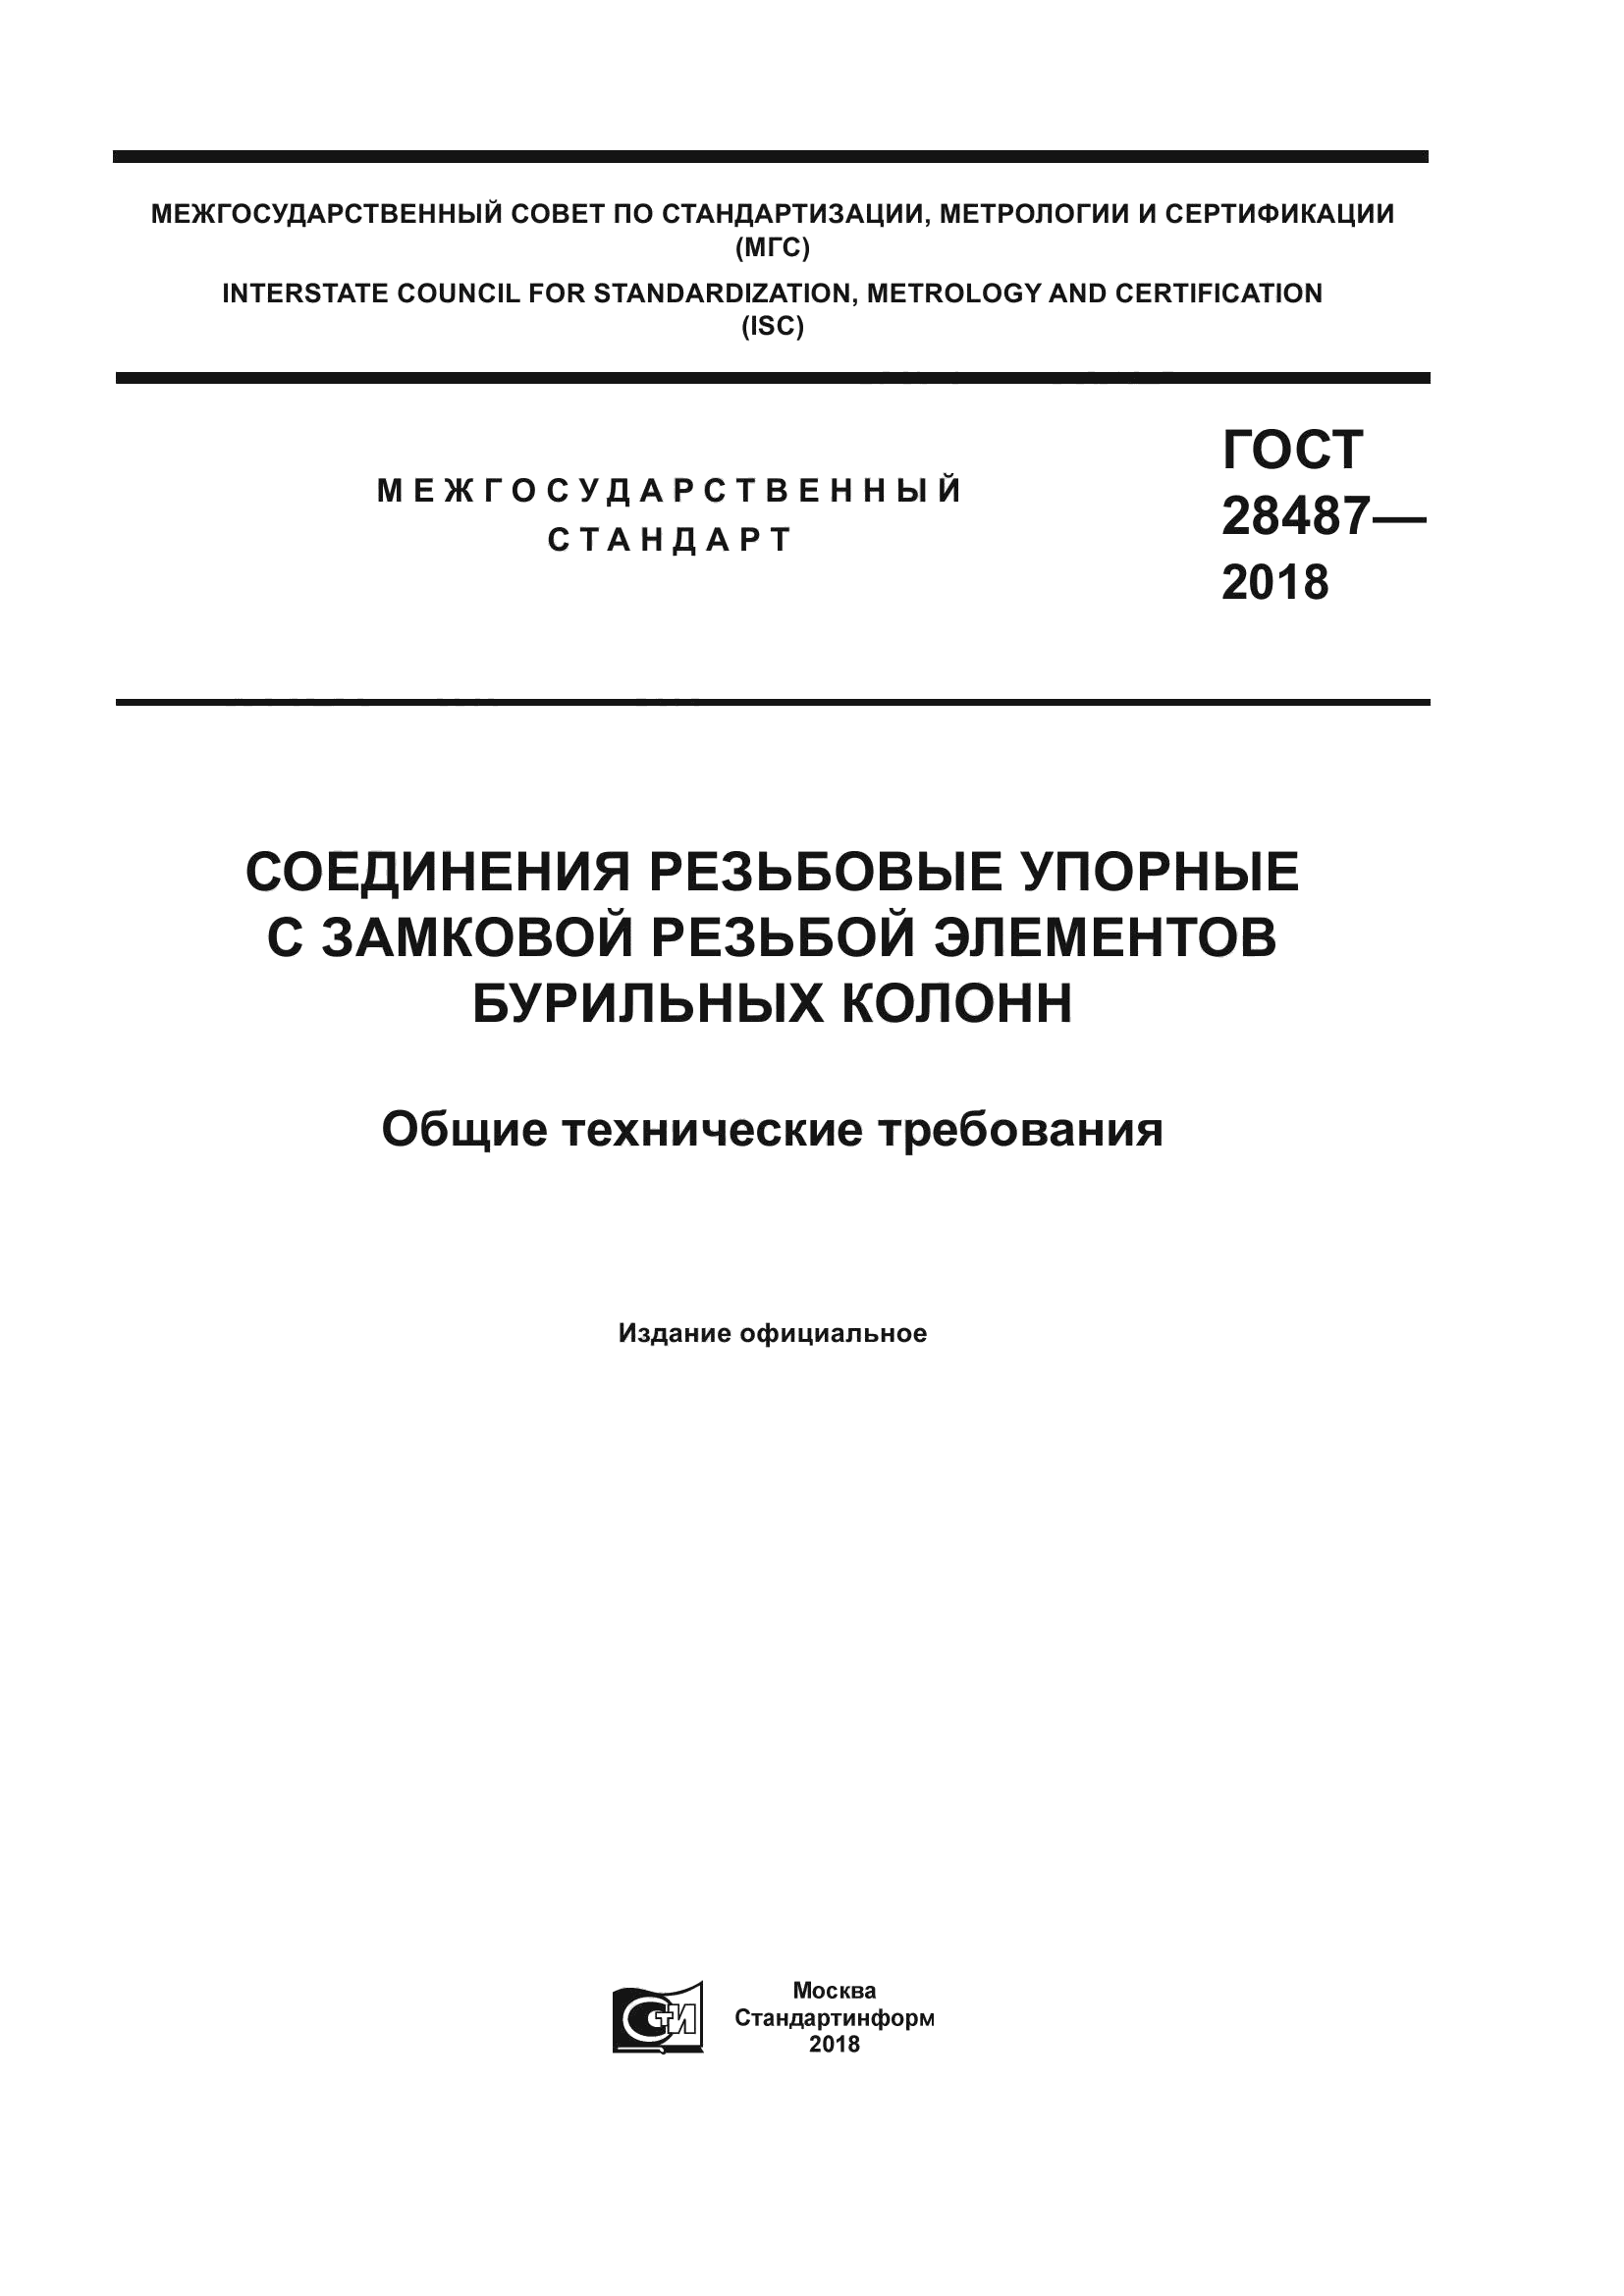 ГОСТ 28487-2018